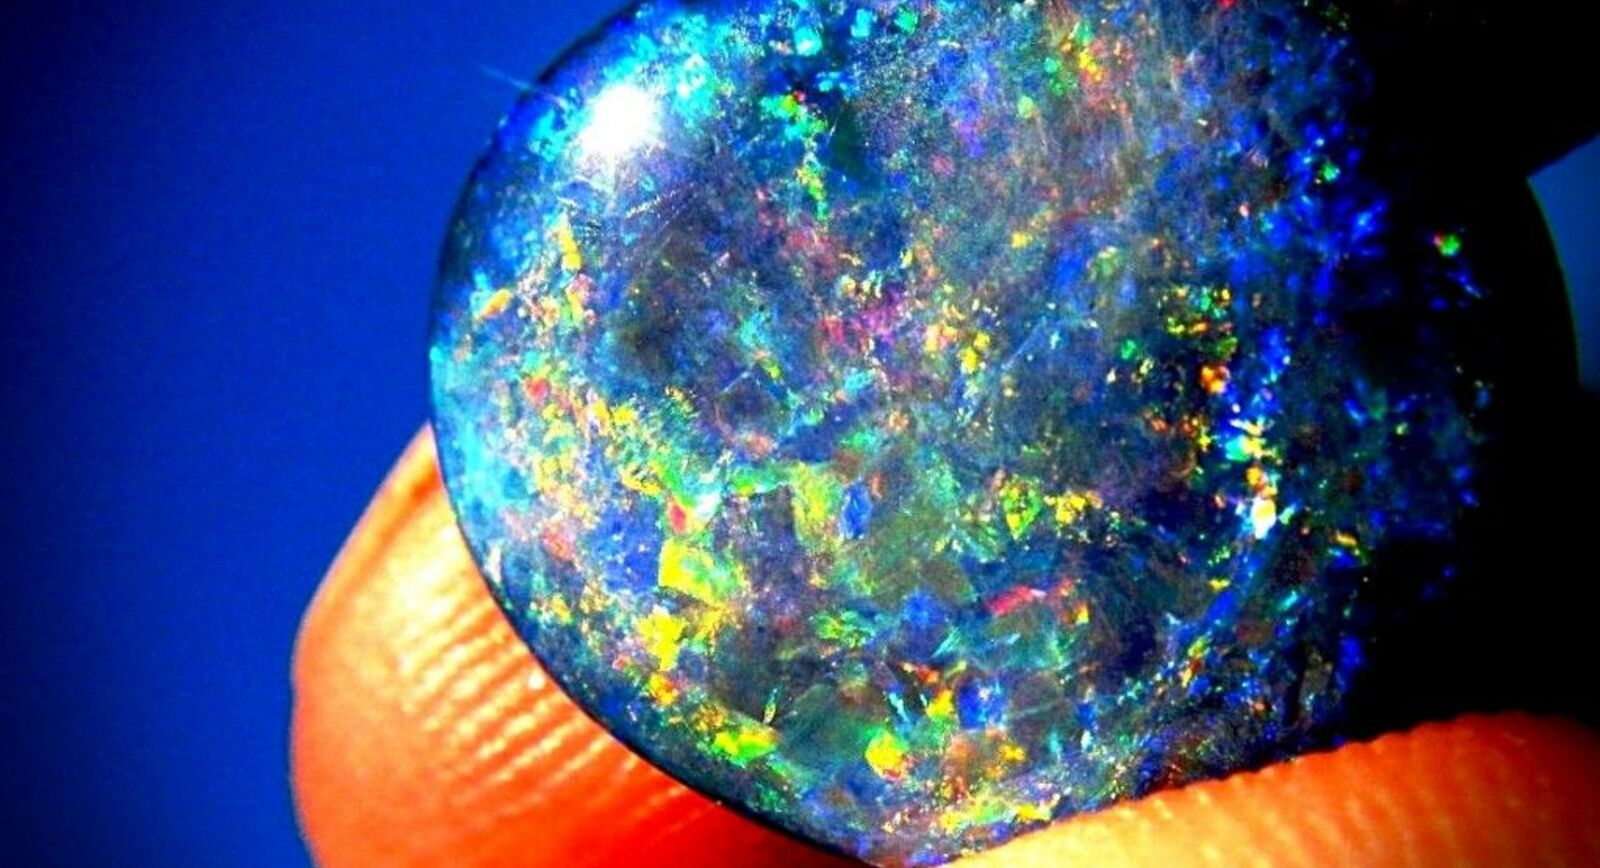 Collectible Gemstones: Black Opal